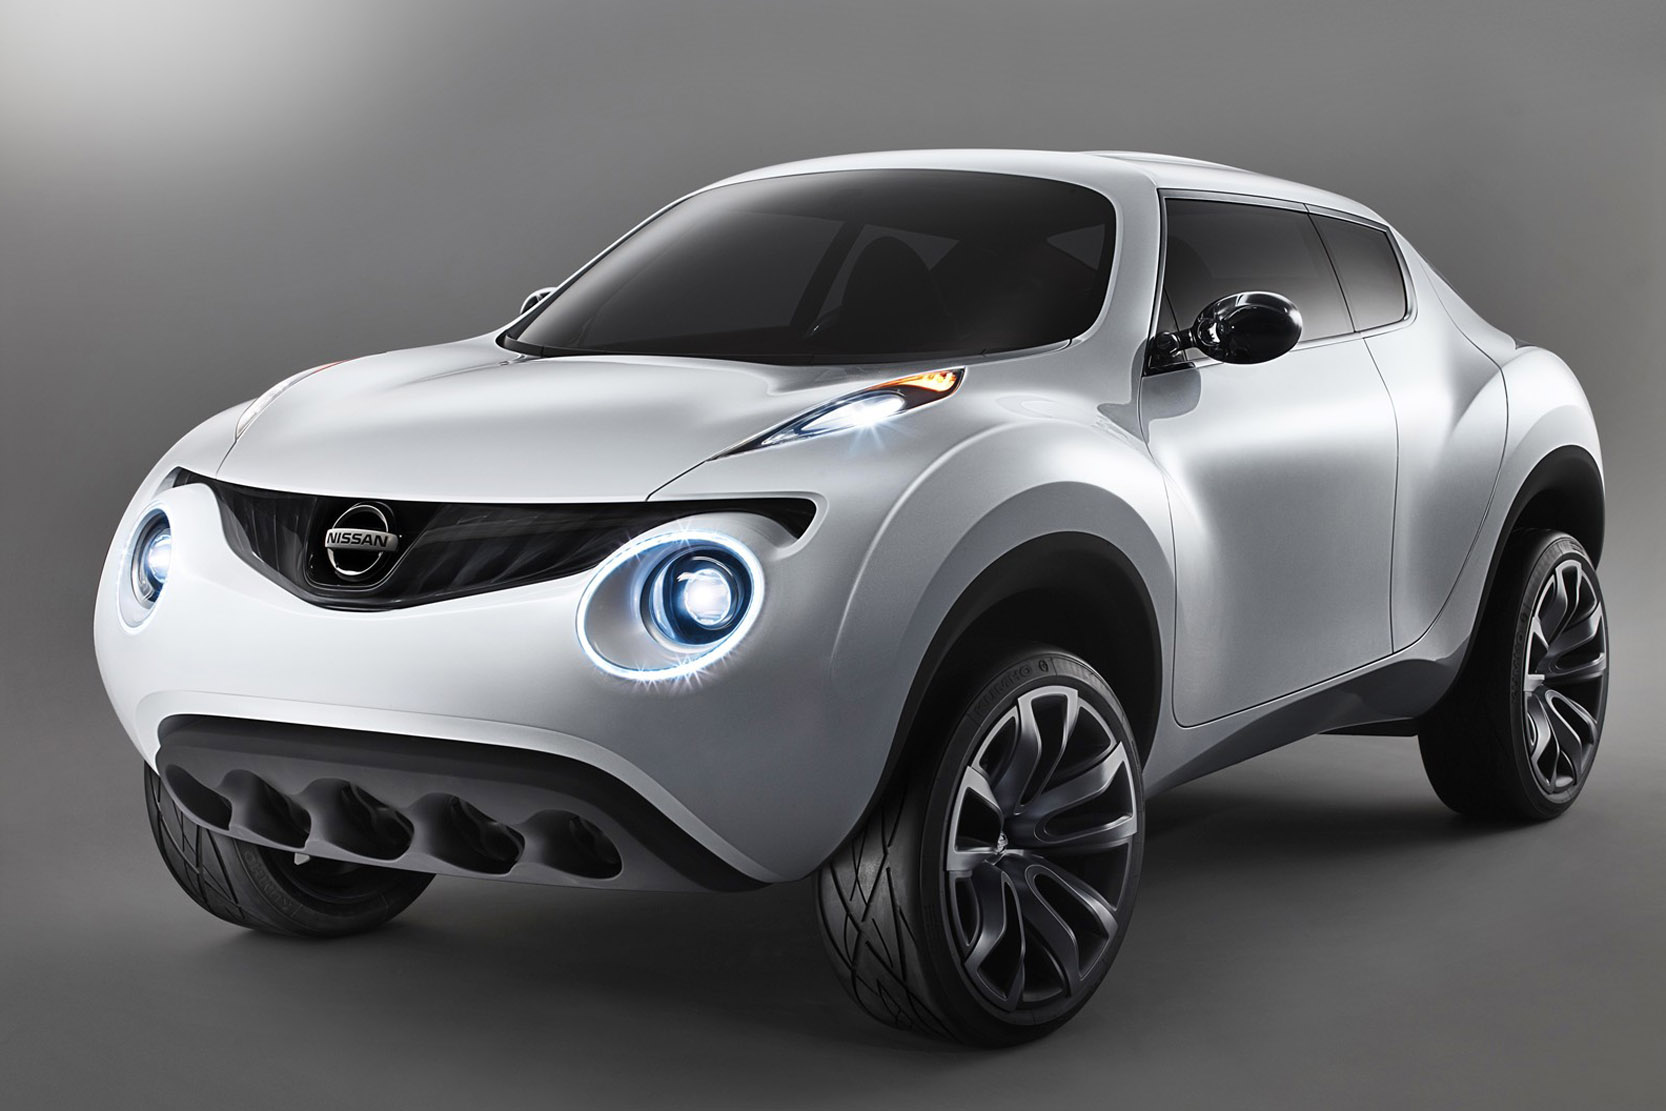 Image principale de l'actu: Nissan qazana concept prefigure un nouveau modele 